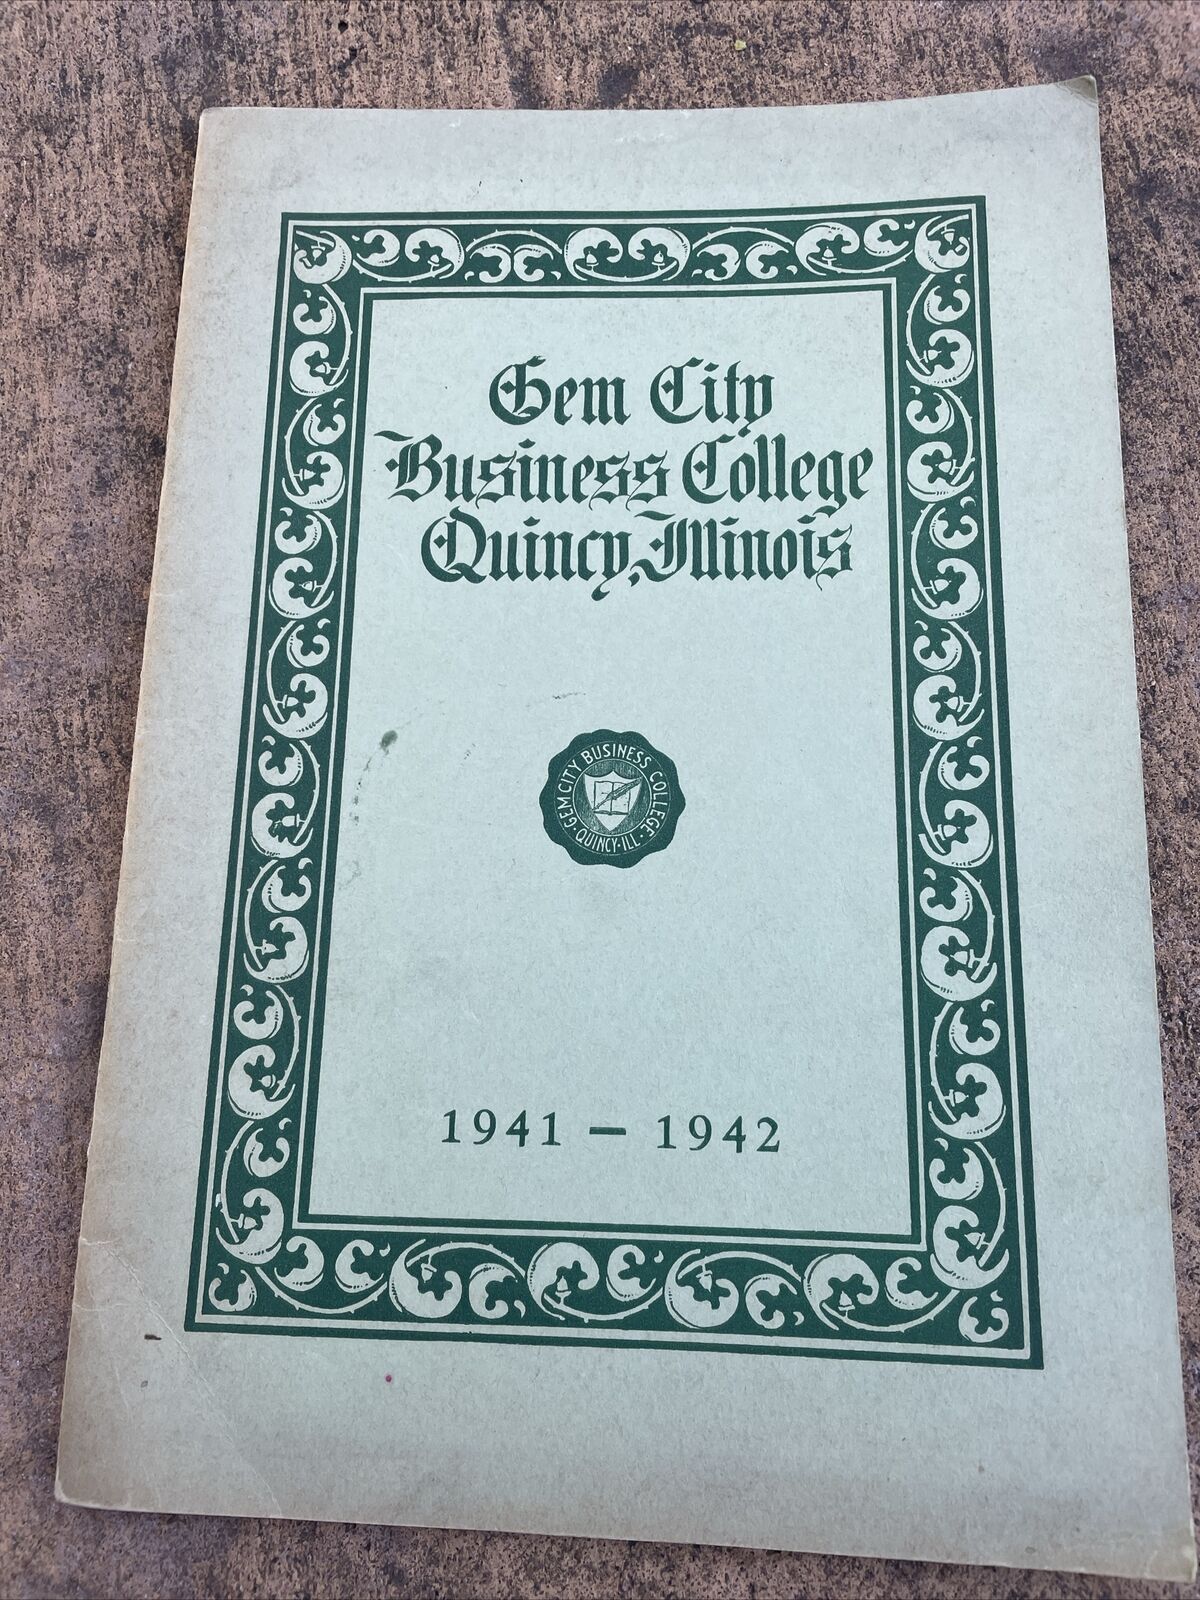 Quincy Illinois Gem City Business College Book Photos Old Vintage Rare 1941 Il